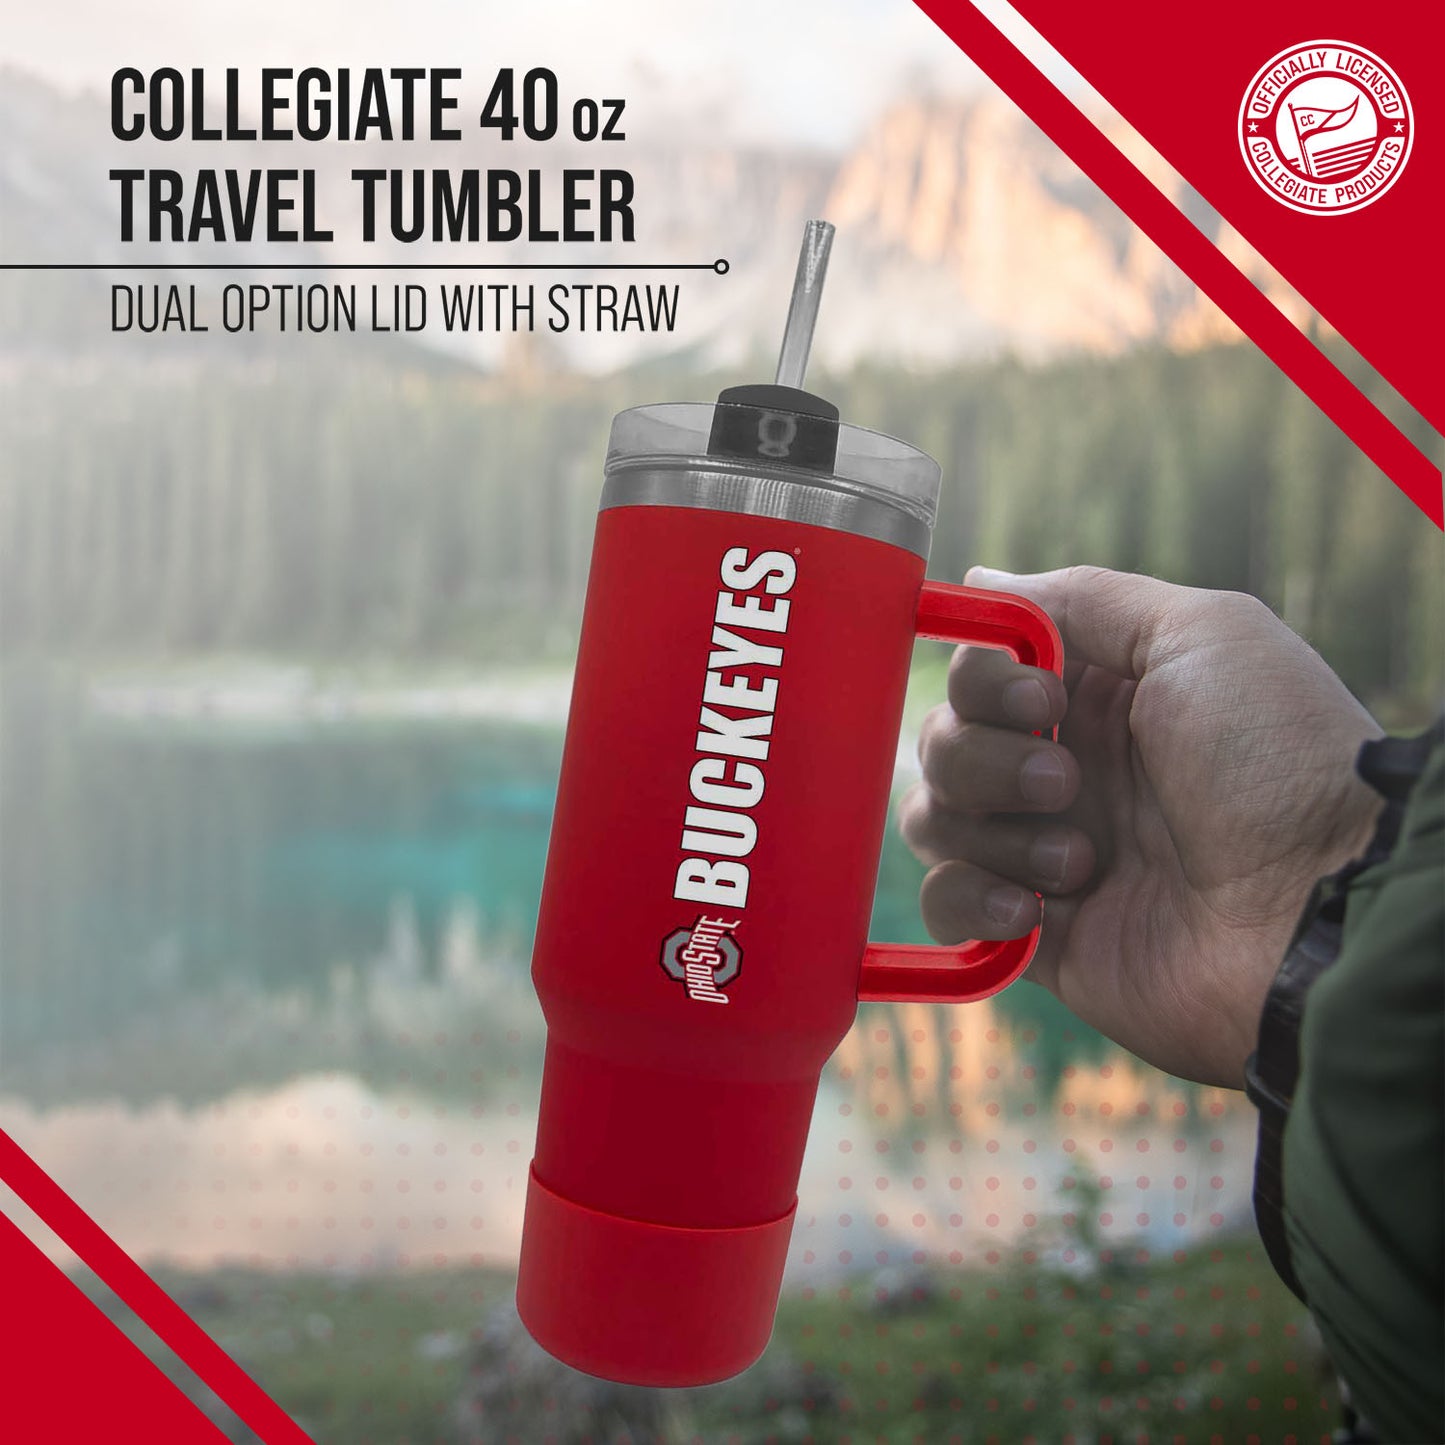 Ohio State Buckeyes College & University 40 oz Travel Tumbler With Handle - Red